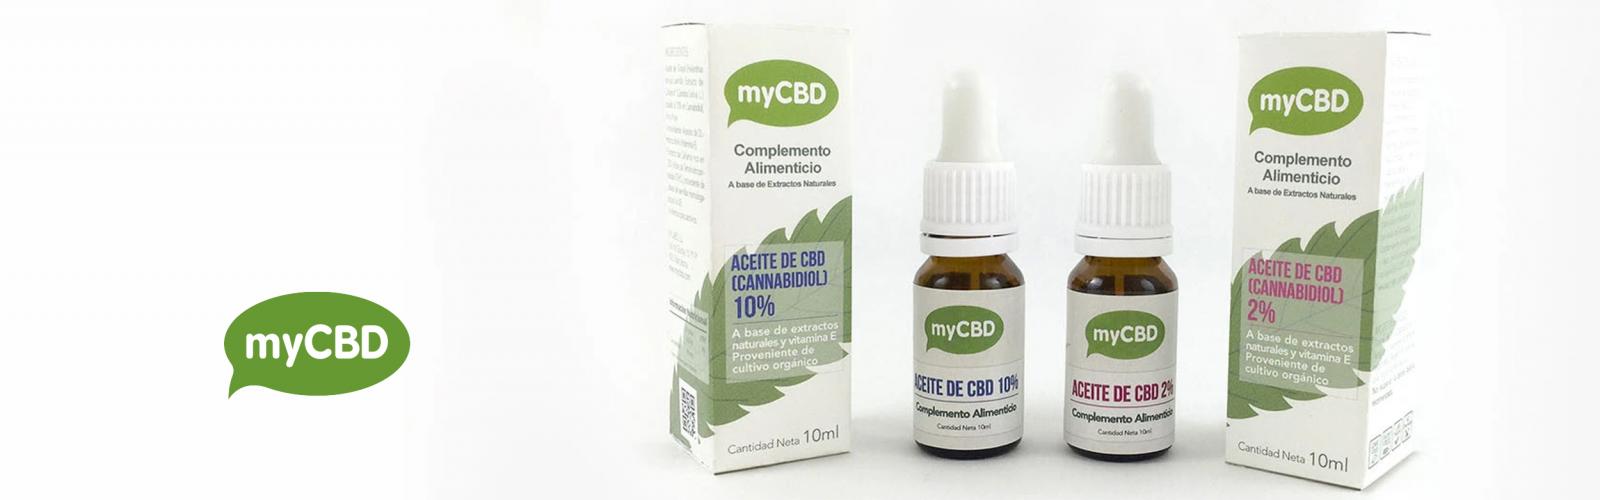 CBD Products by myCBD